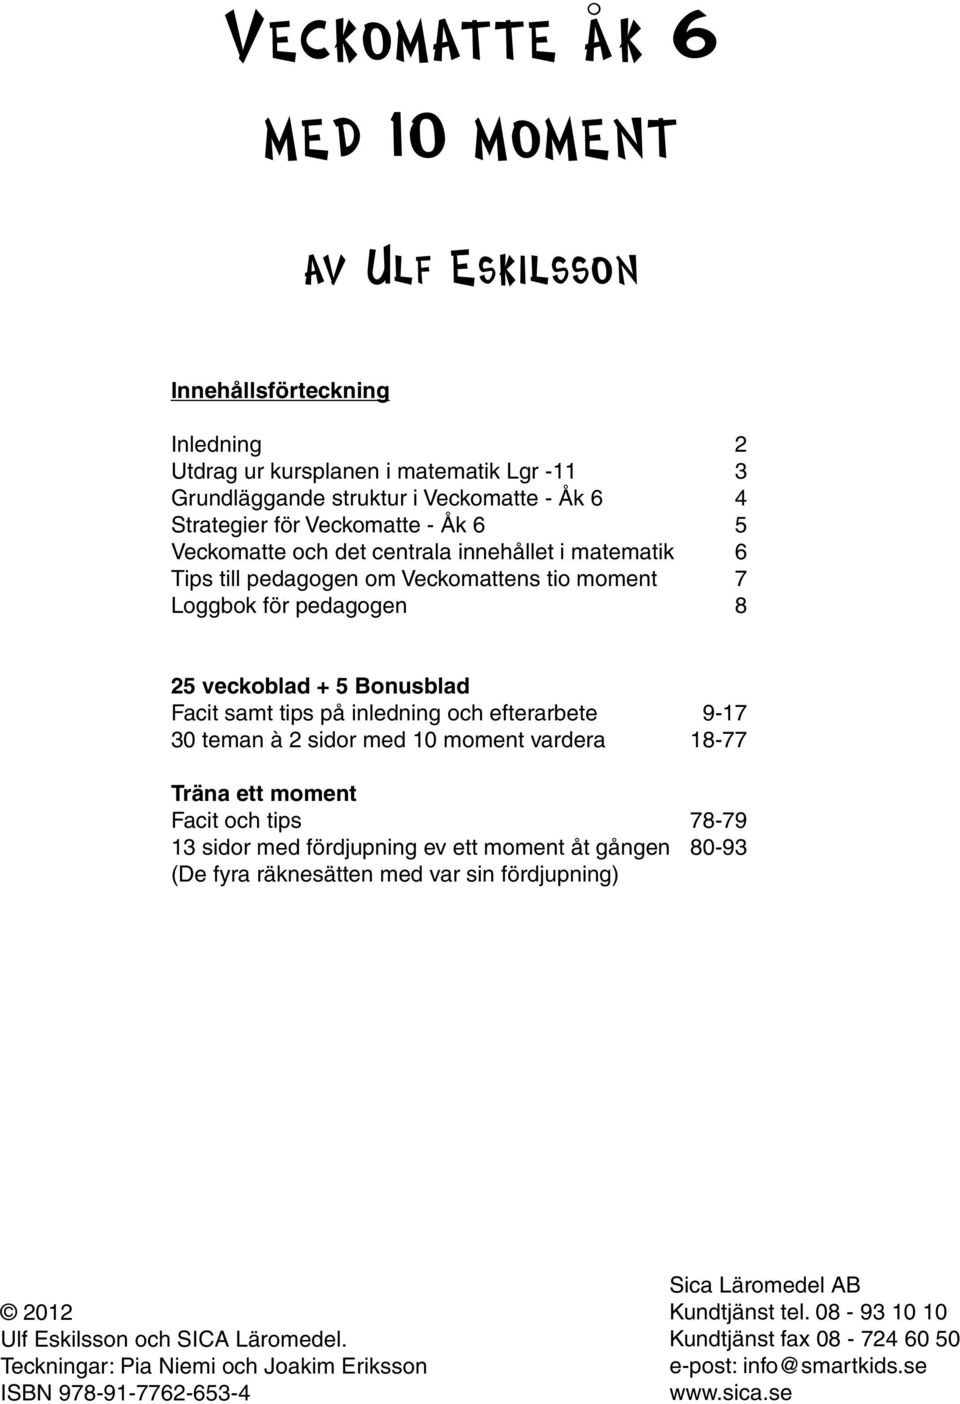 Veckomatte åk 6 med 10 moment - PDF Free Download